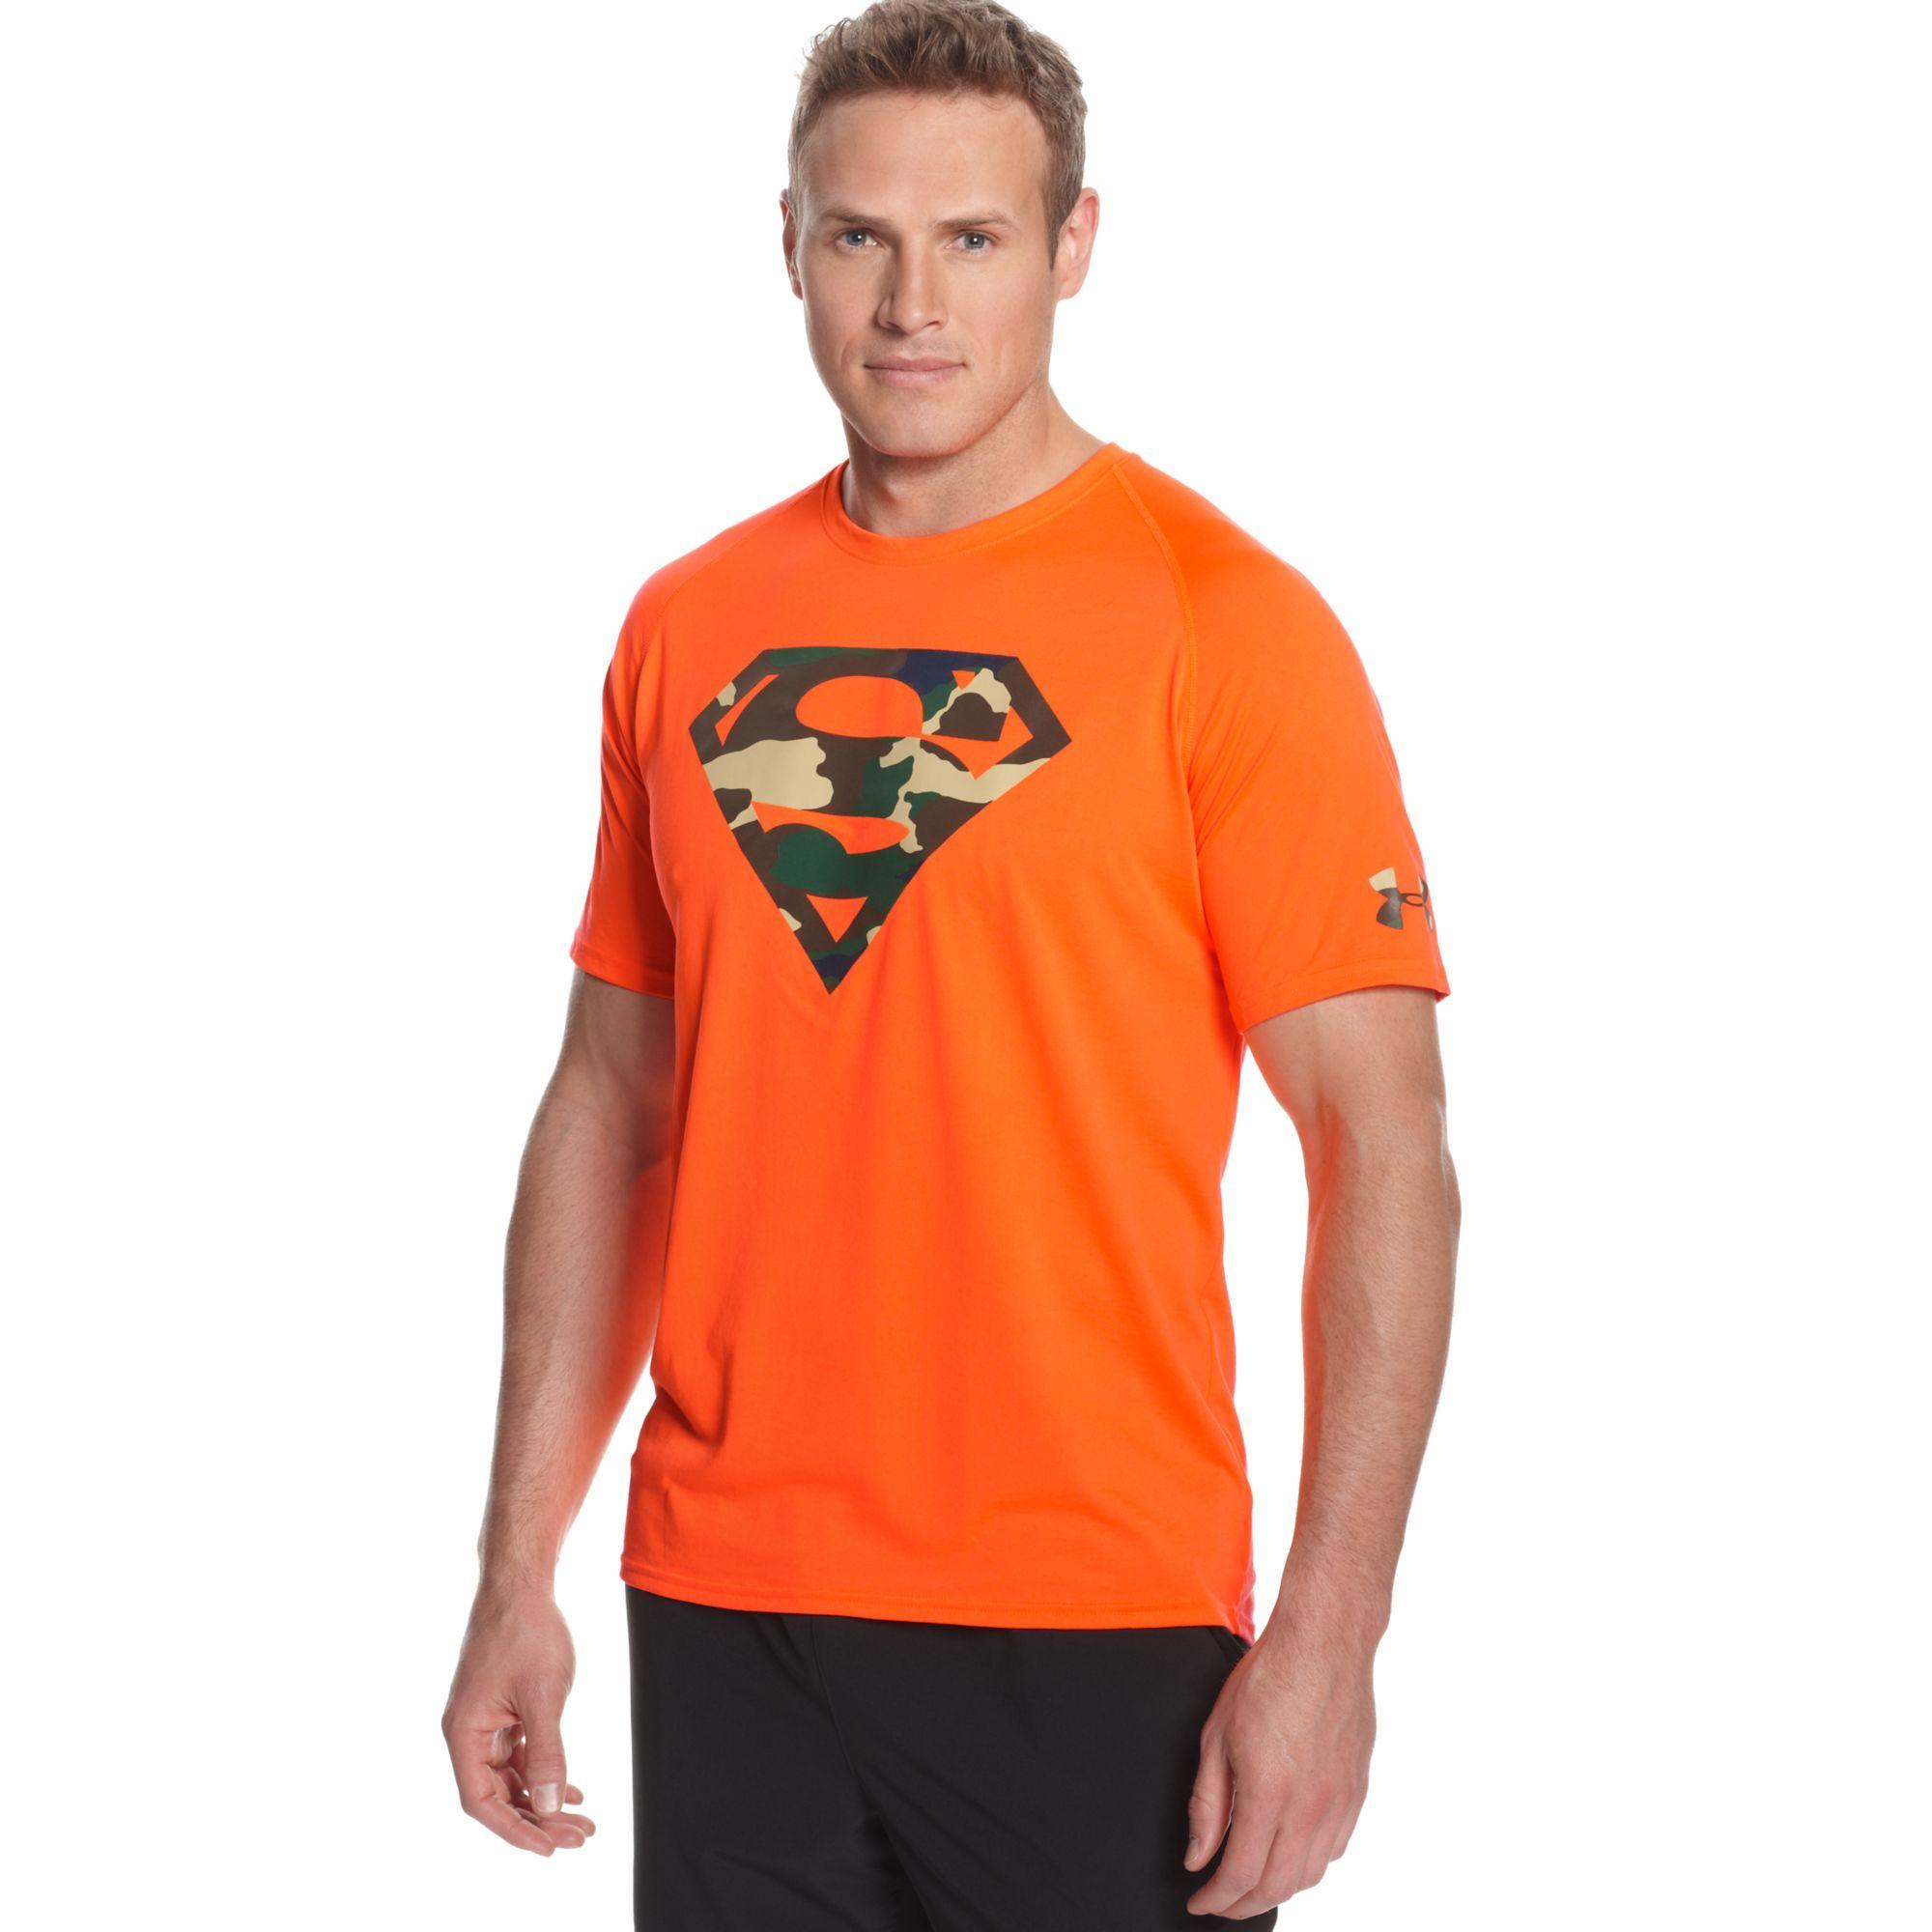 Orange Camo Superman Logo - Lyst - Under Armour Under Amrour Alter Ego Camouflage Superman ...